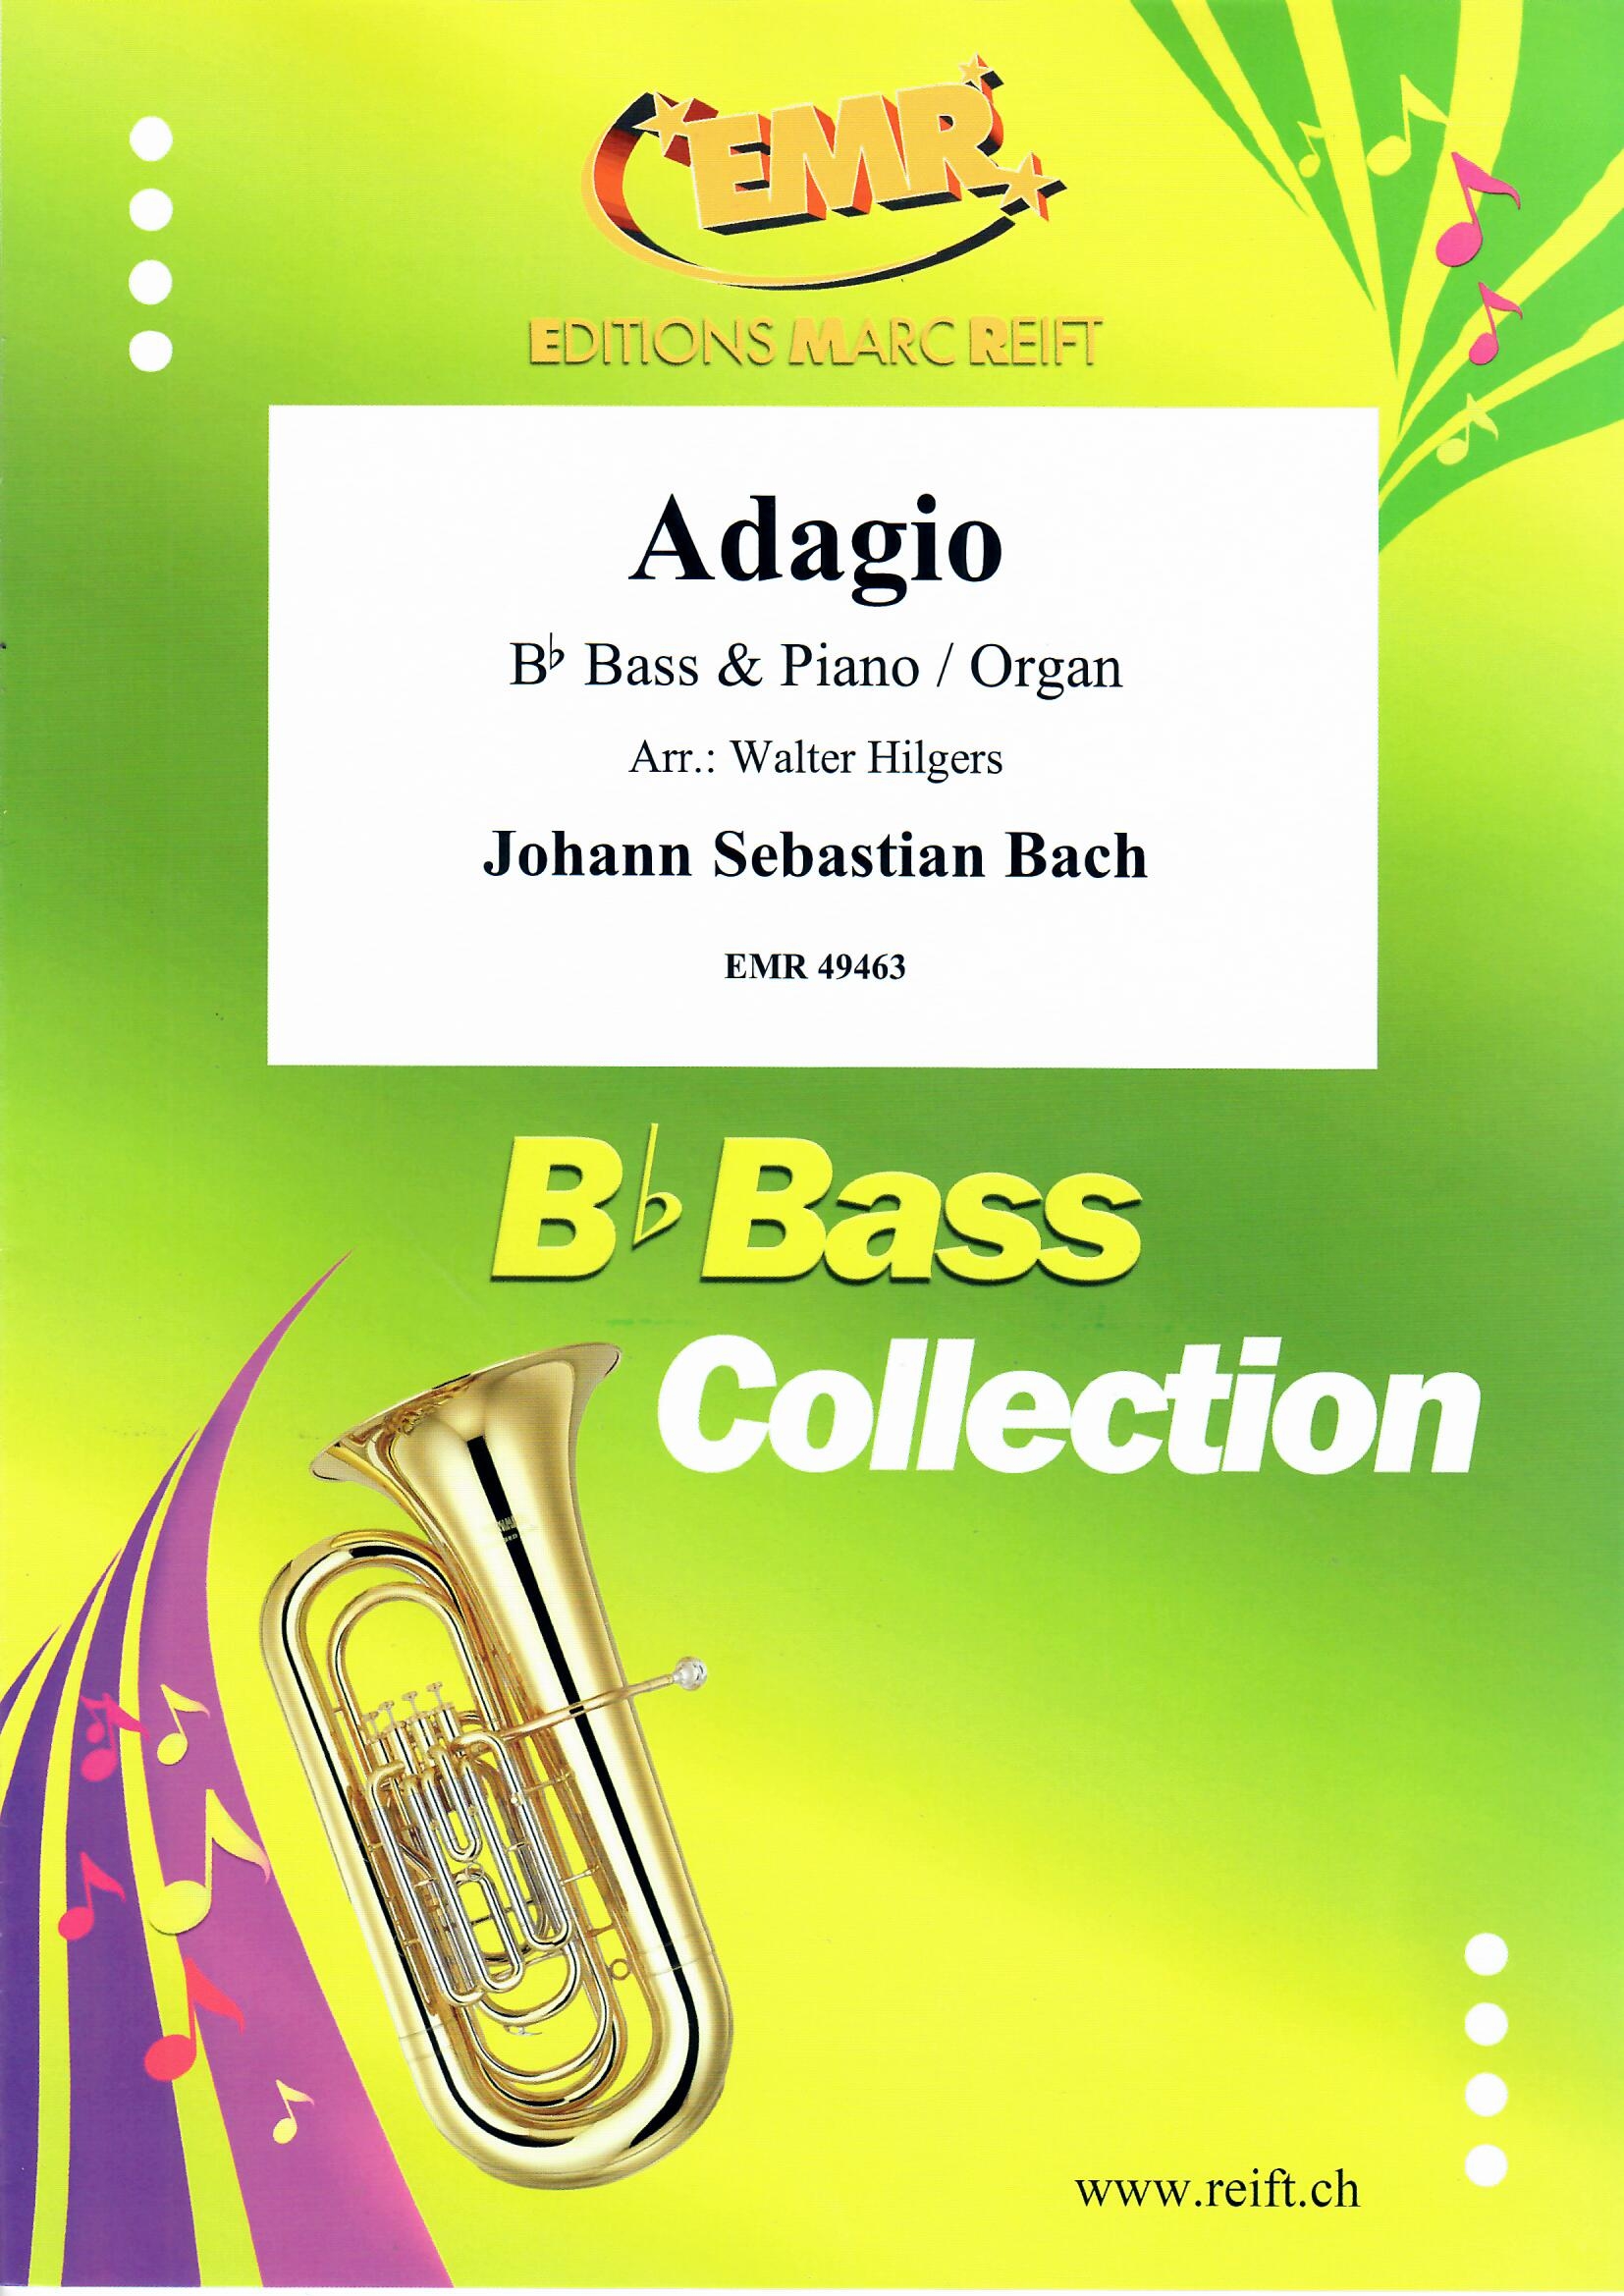 ADAGIO - Bb. Bass & Piano